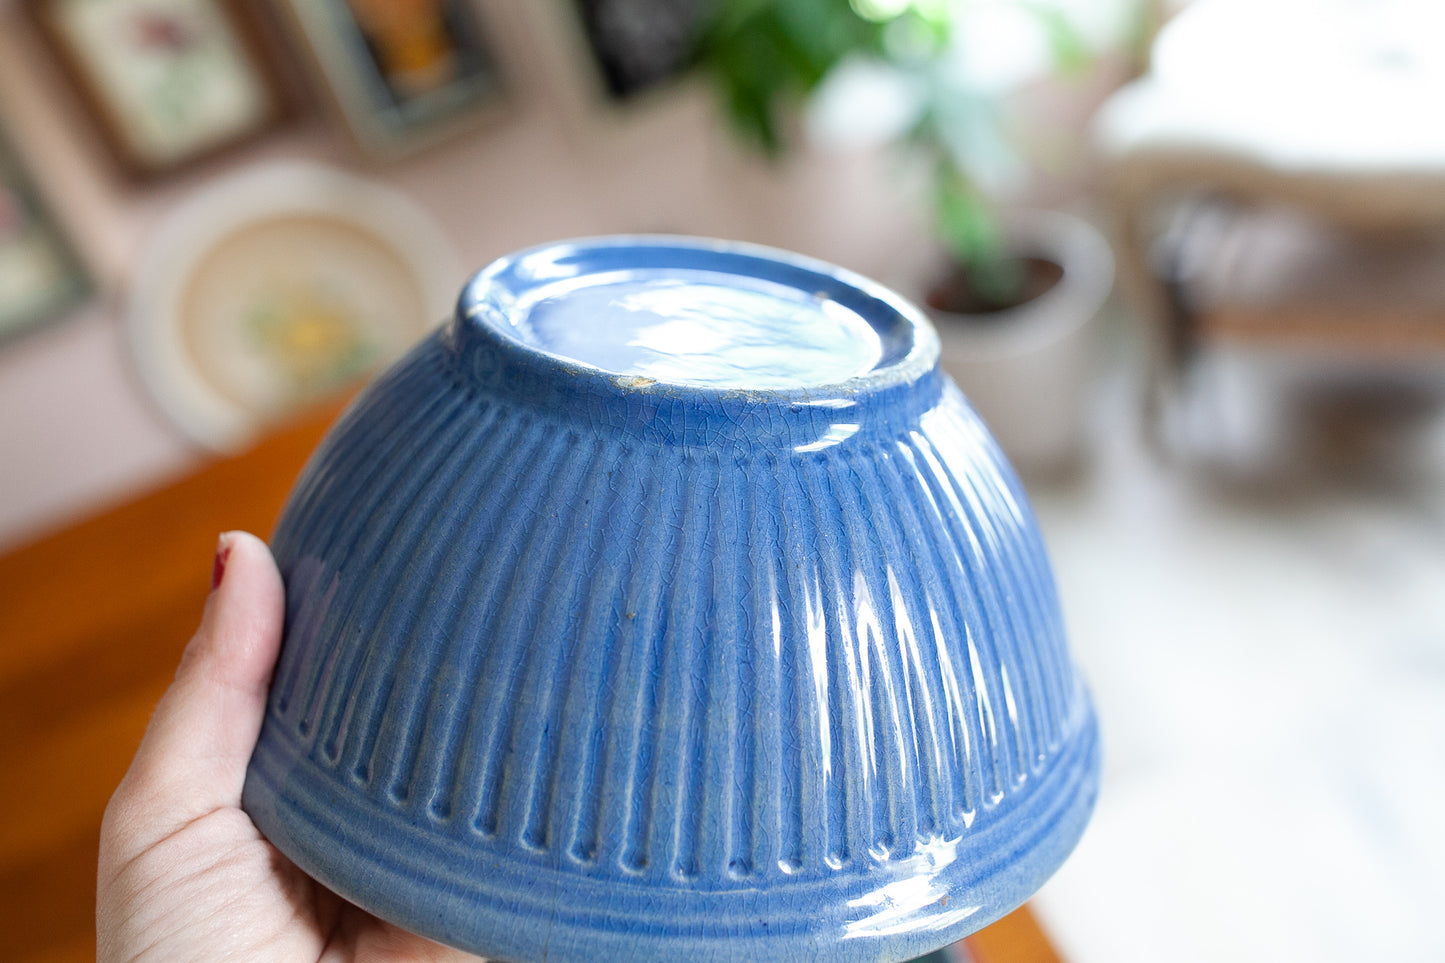 Blue Crock - Vintage Crock - Blue Stoneware bowl